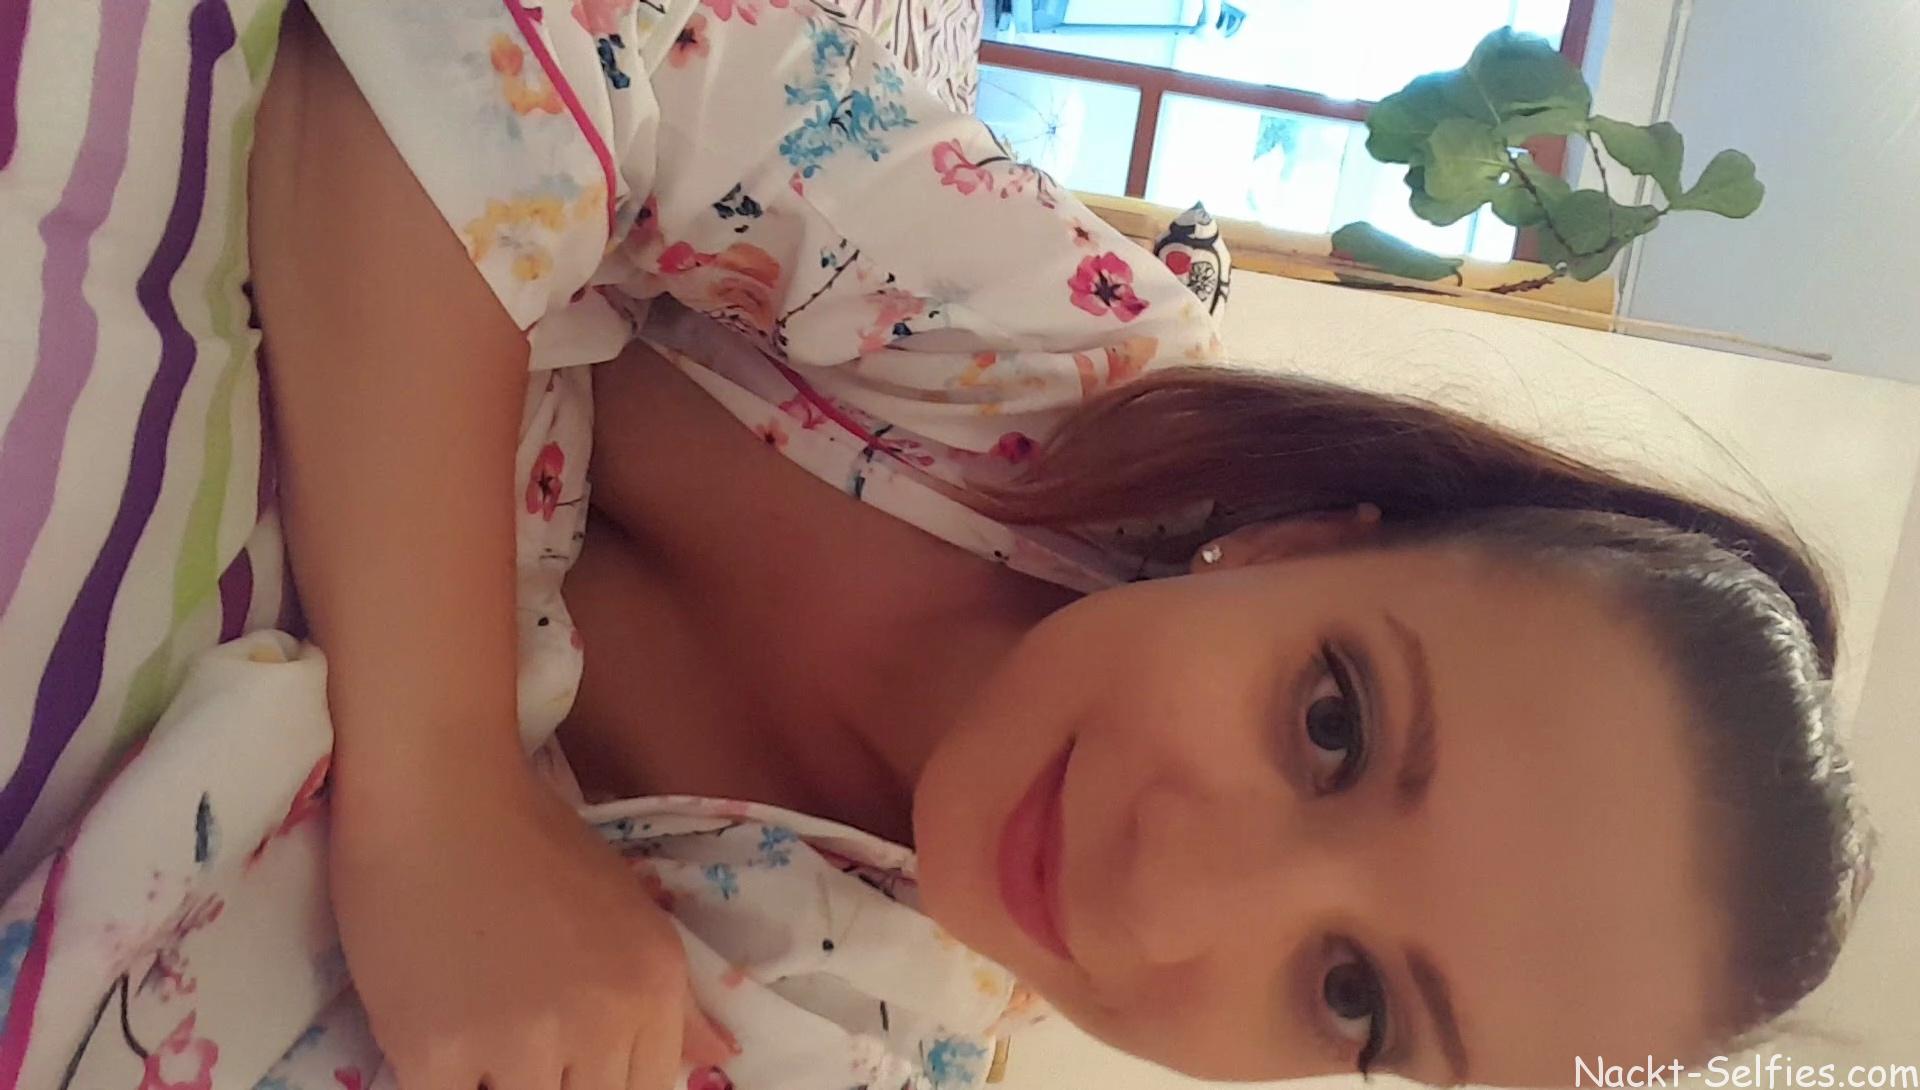 Geiler Nackt Selfie Clip von junger Frau Teressa (22)